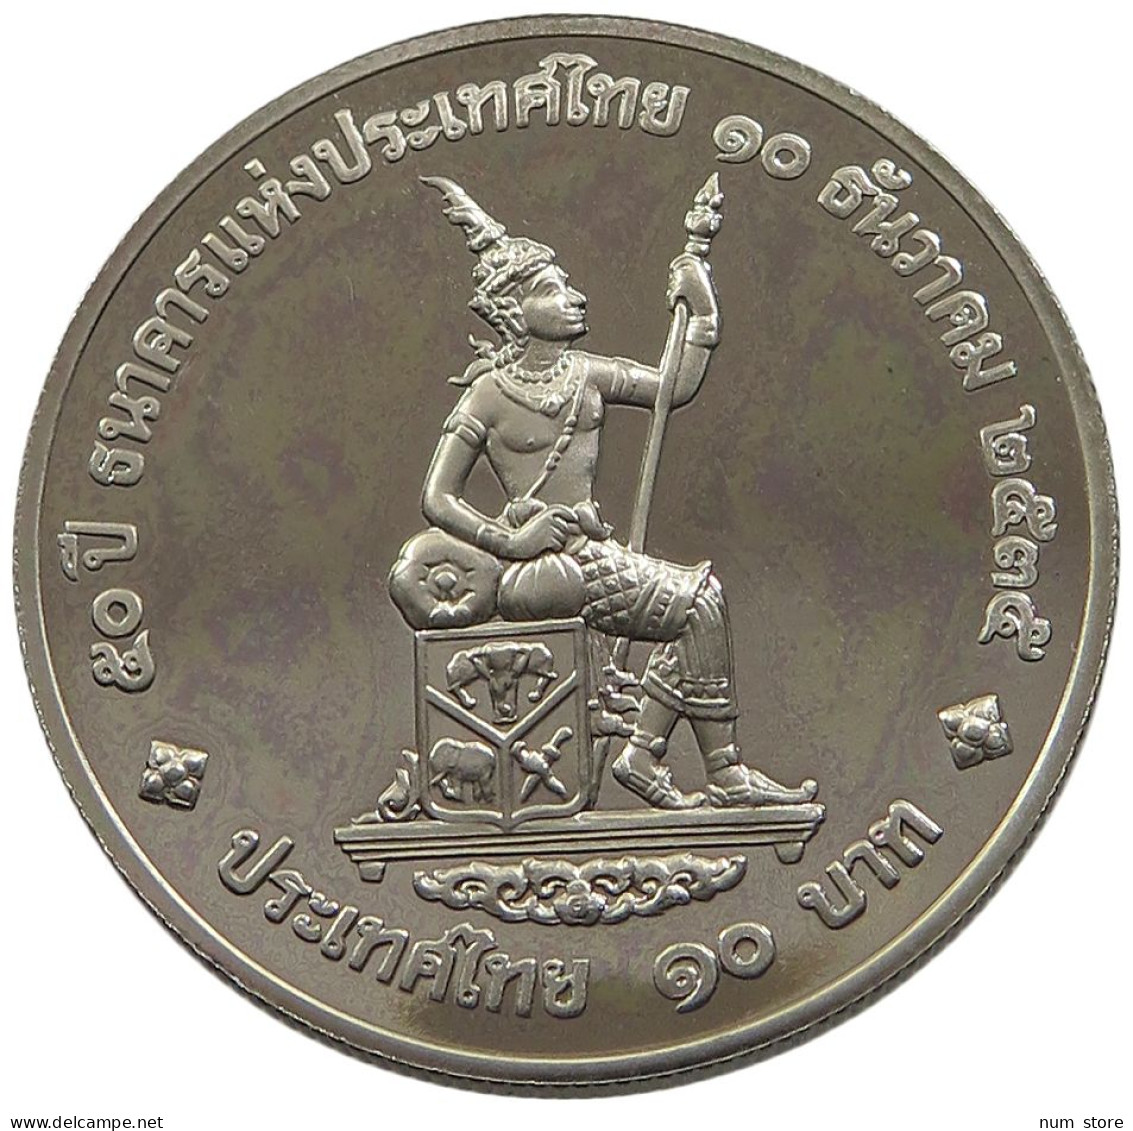 THAILAND 10 BAHT 1992 2535 PROOF #sm14 0975 - Thailand